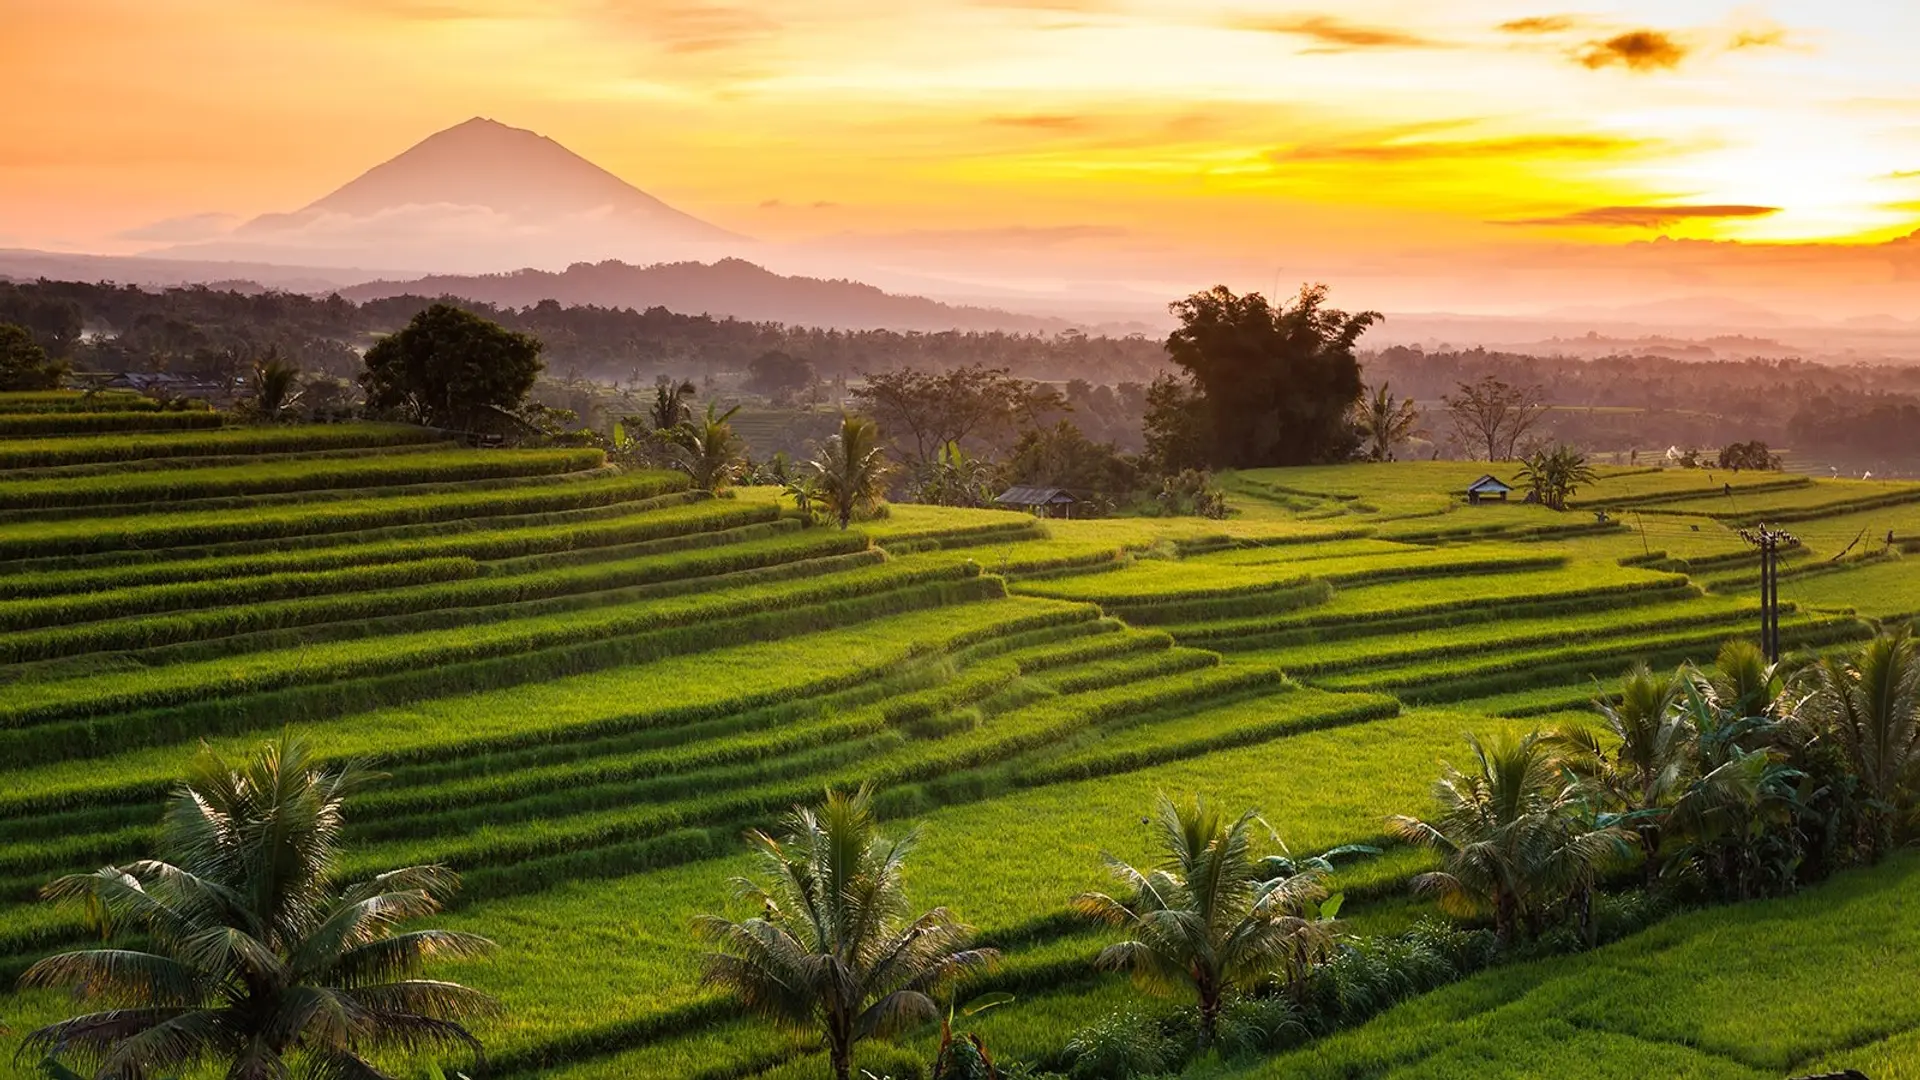 Destinations Articles - Bali Travel Guide